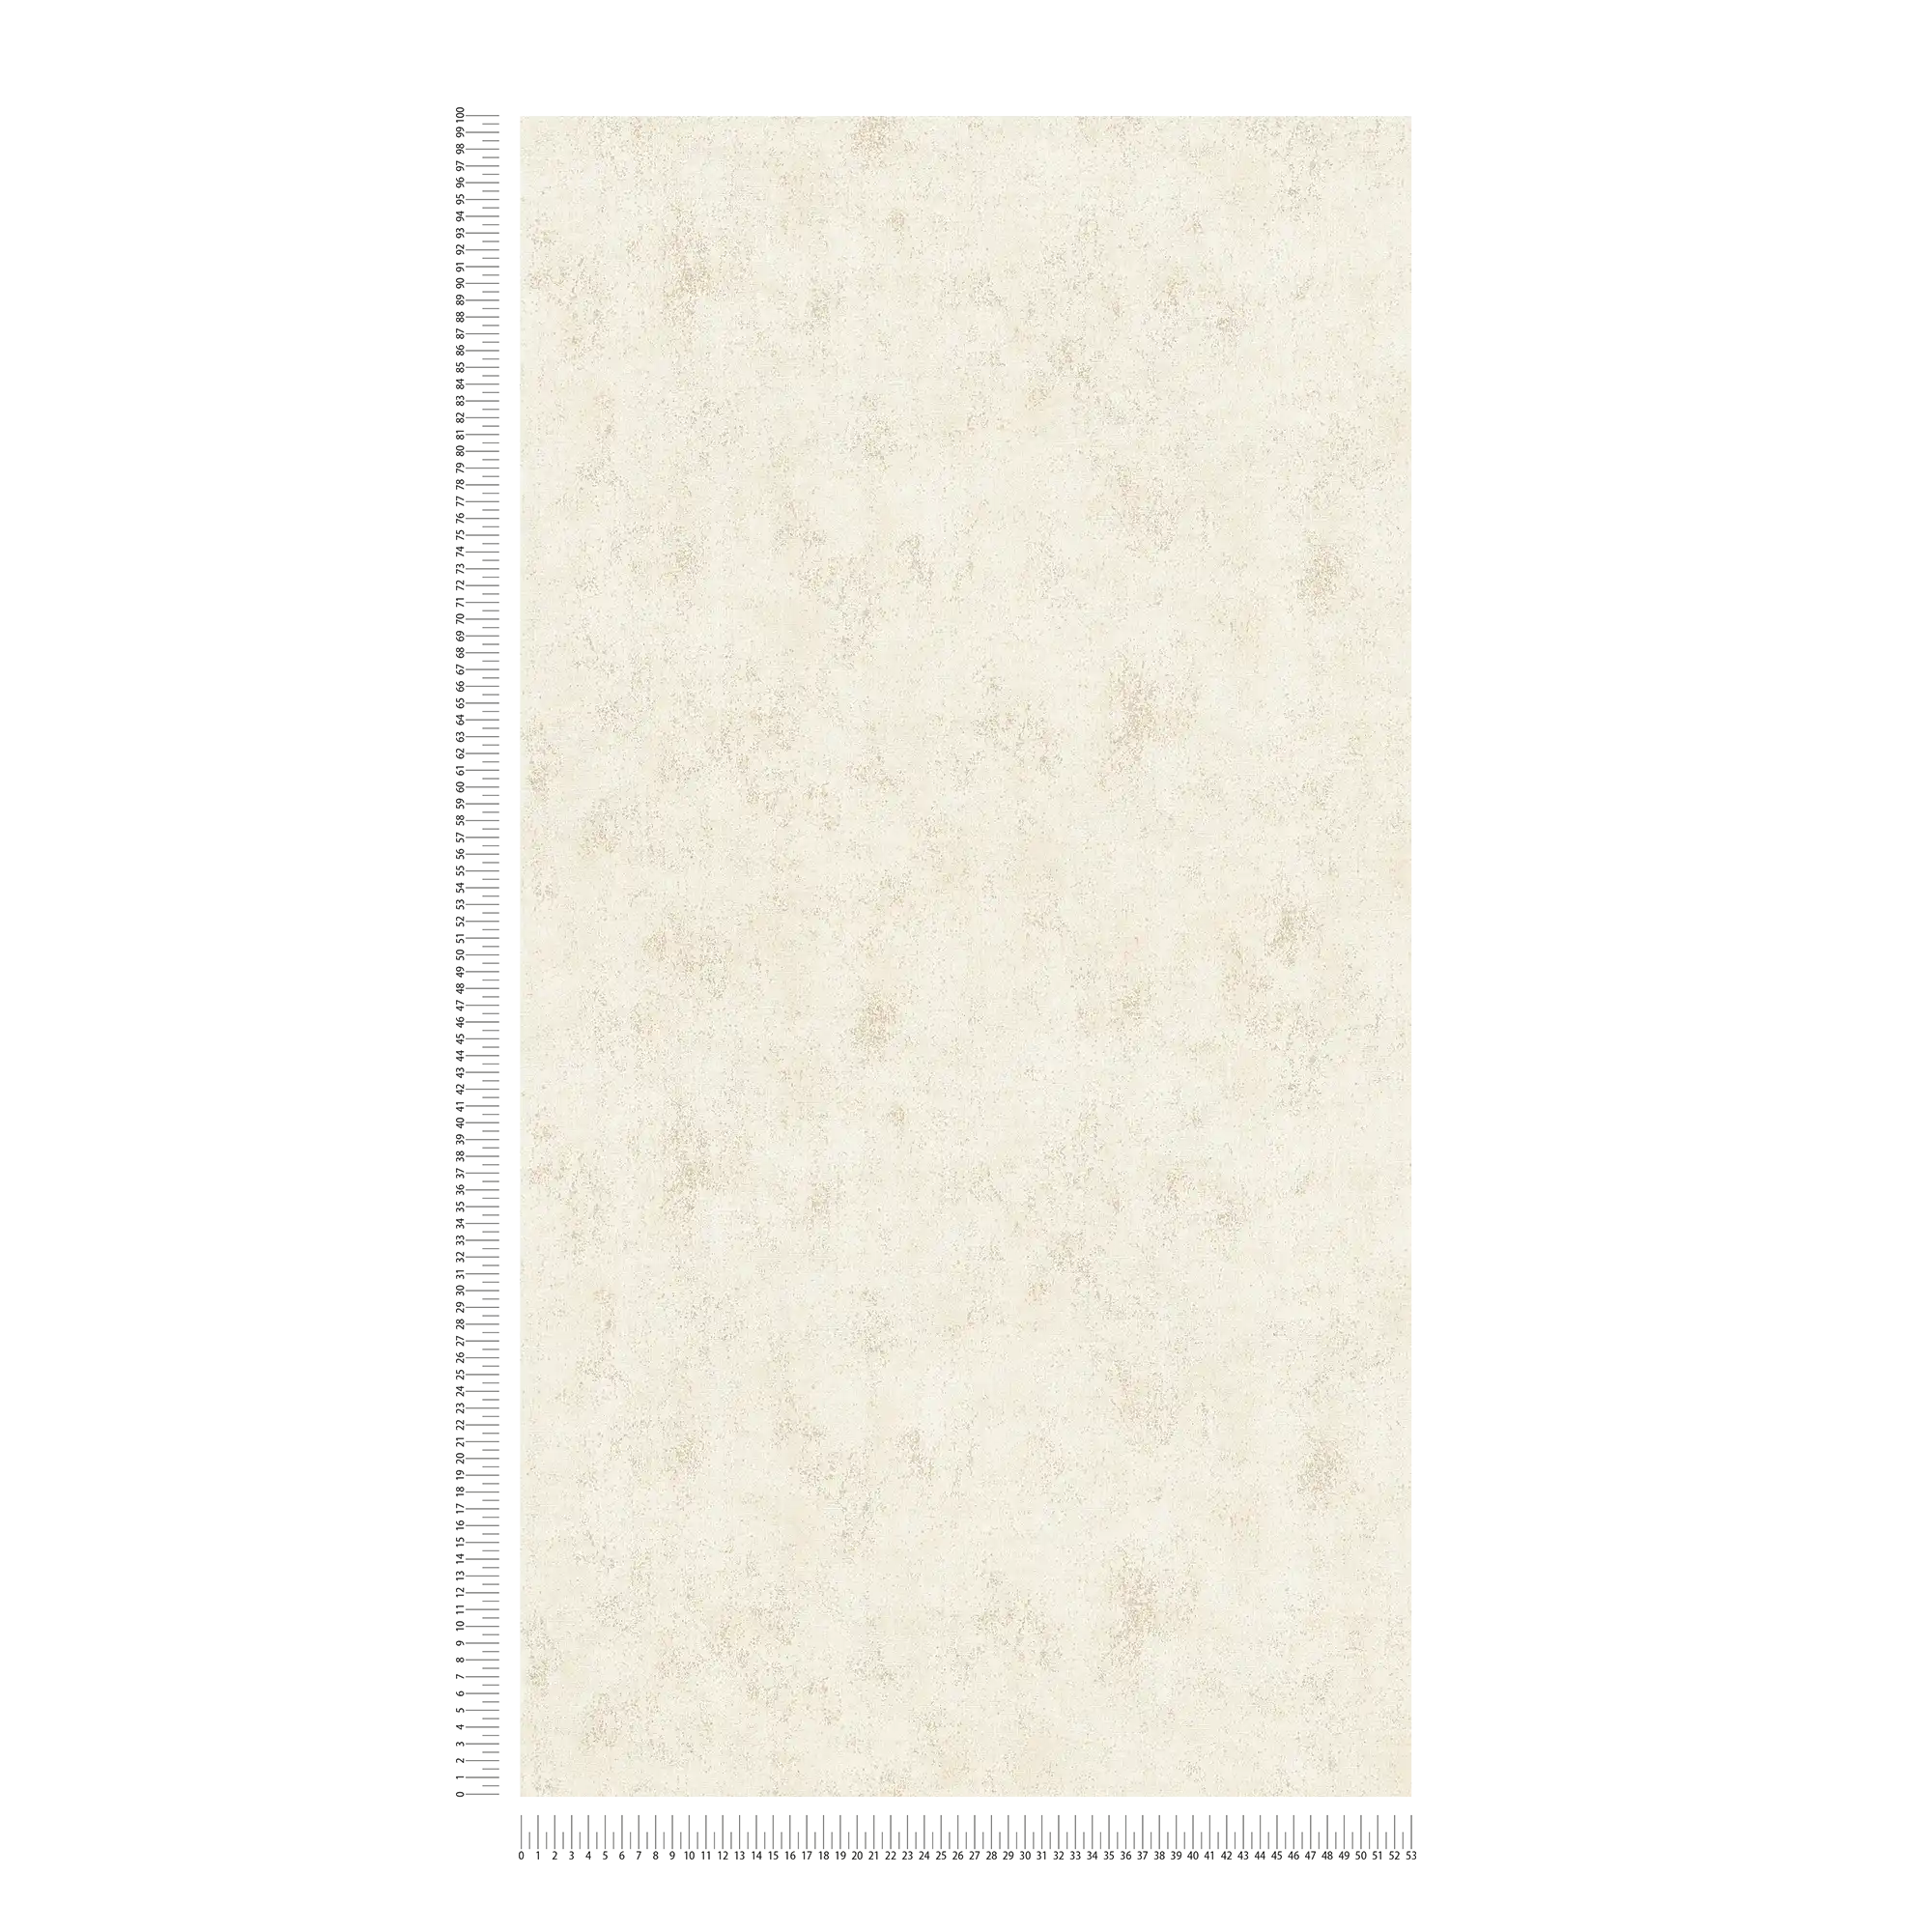             Carta da parati con struttura discreta - beige
        